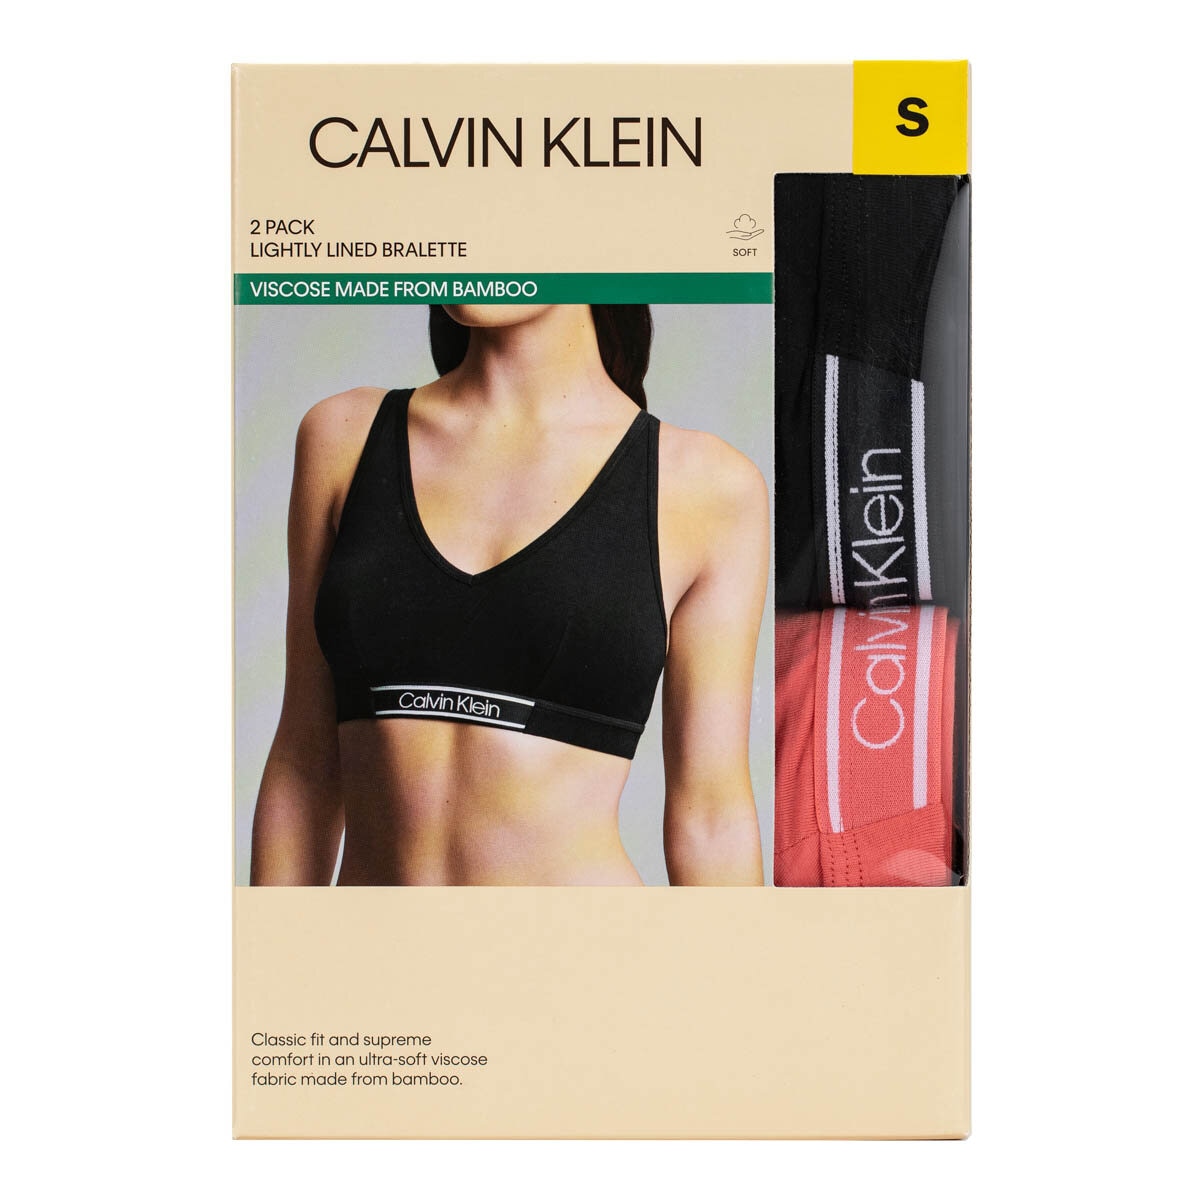  Calvin Klein 女柔軟無鋼圈內衣二件組 黑 / 粉 L